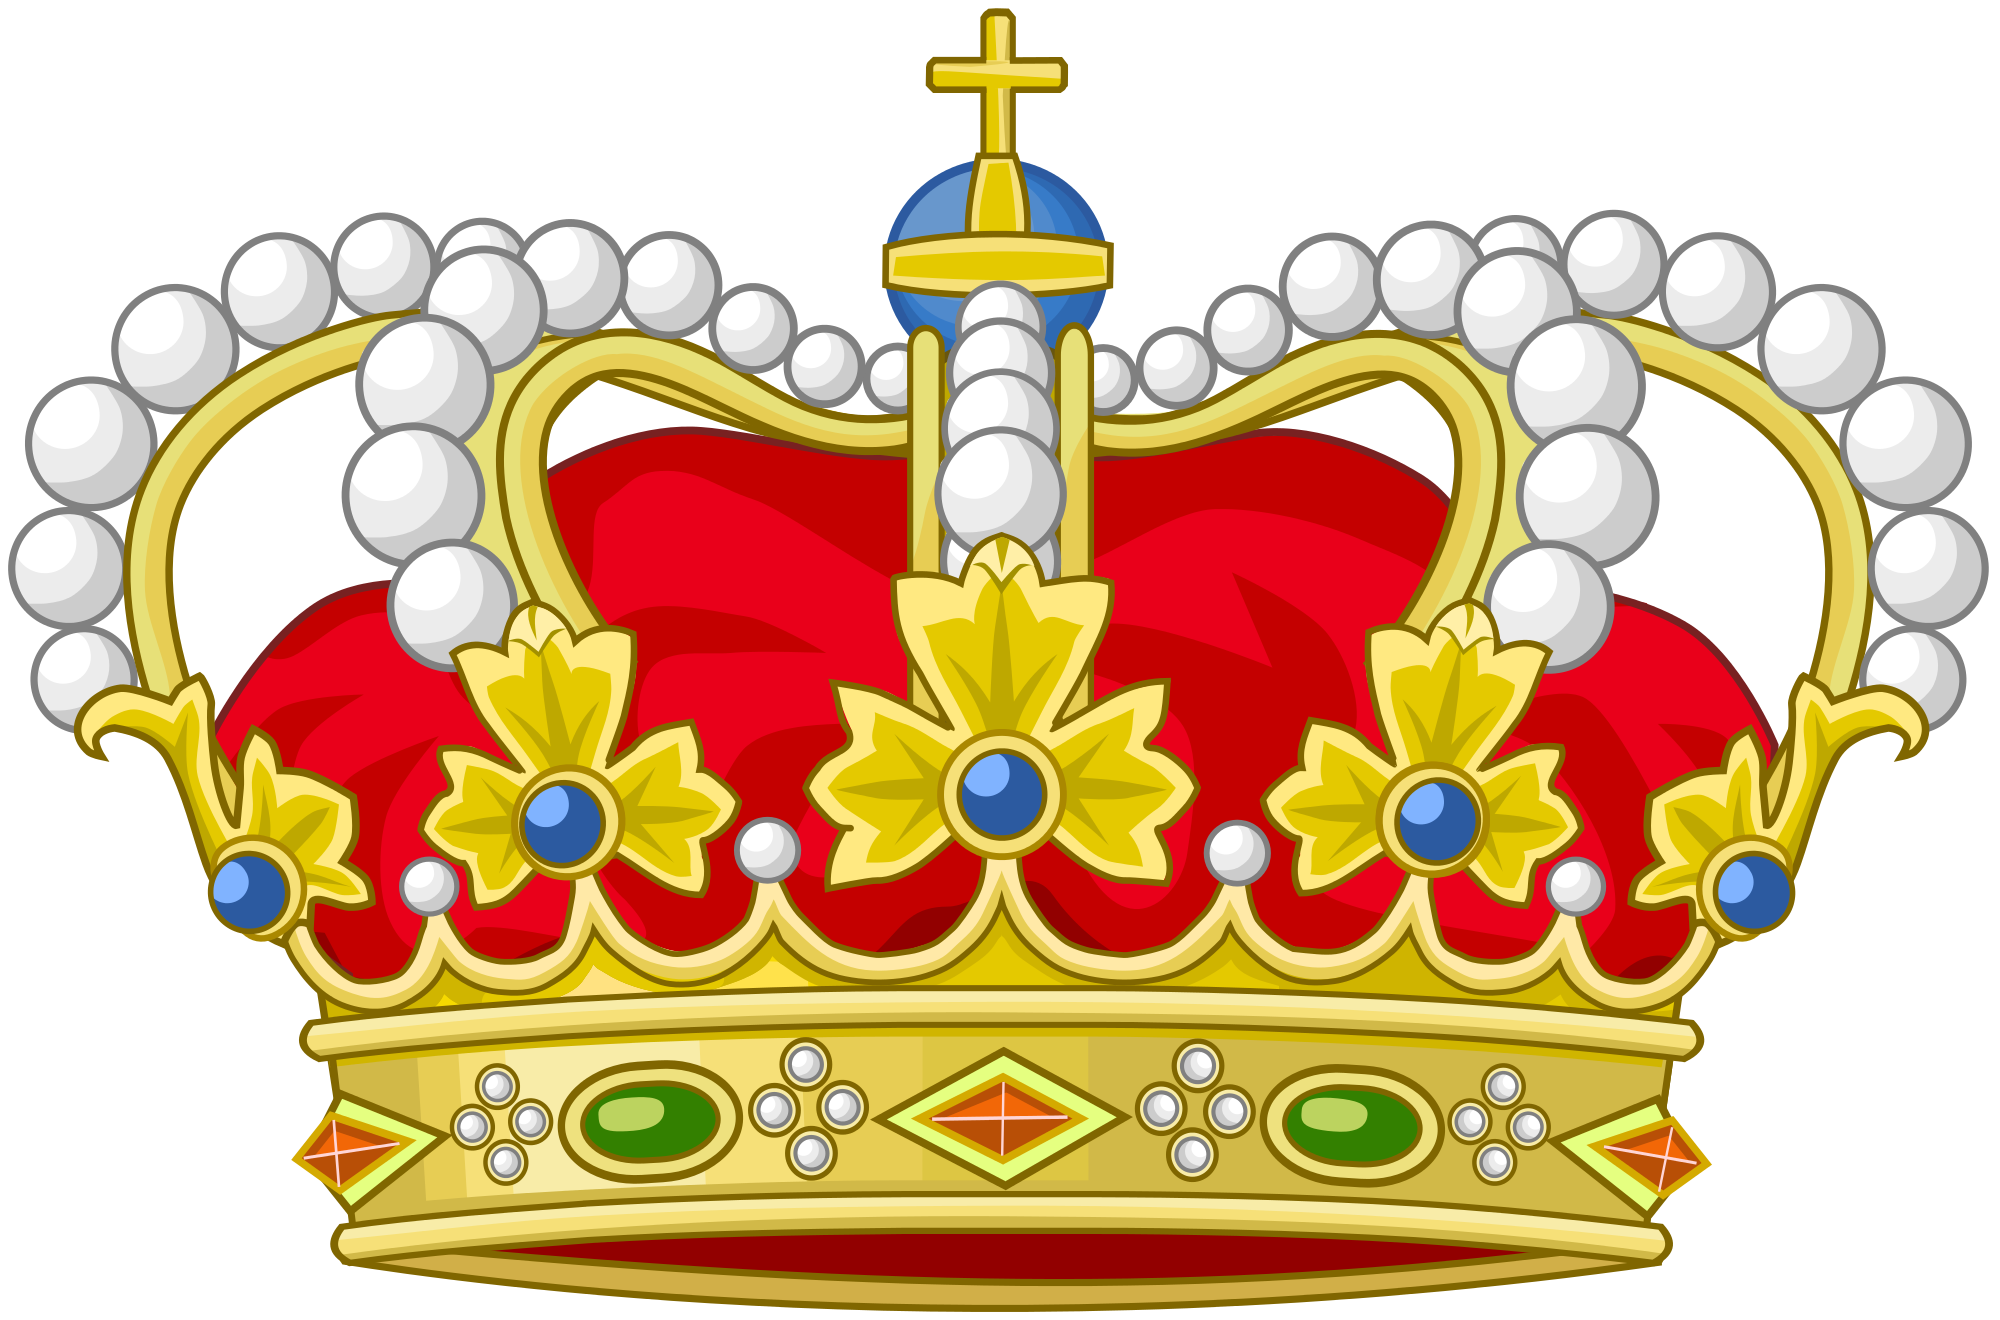 Download Crown clipart royal crown, Crown royal crown Transparent ...